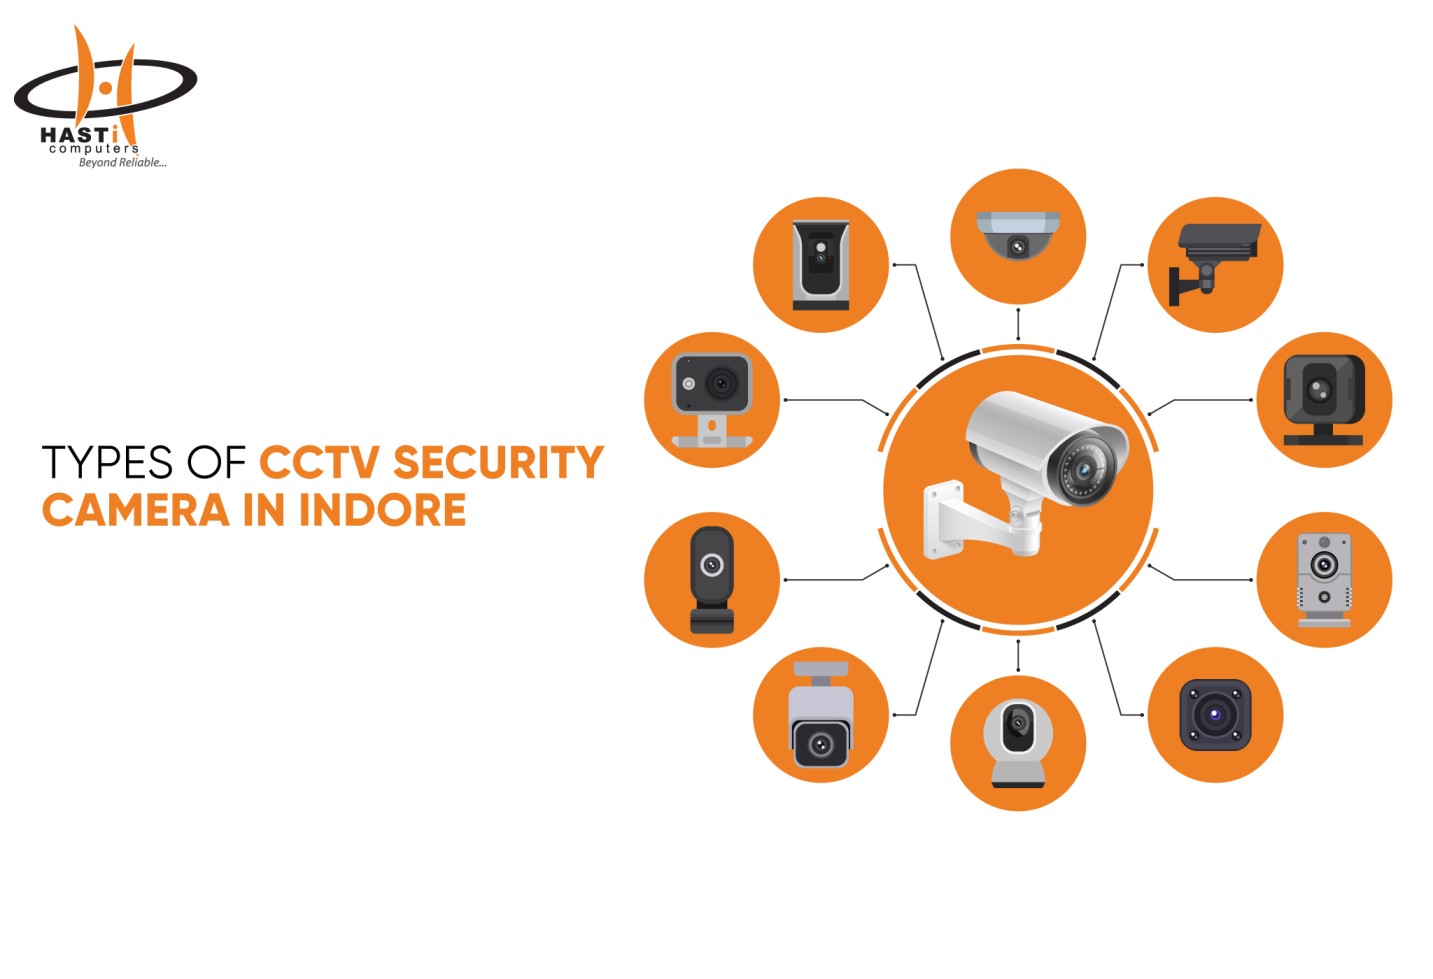 CCTV Security Camera in Indore, CCTV Camera Indore, CCTV Camera in Indore, Hd Cameras